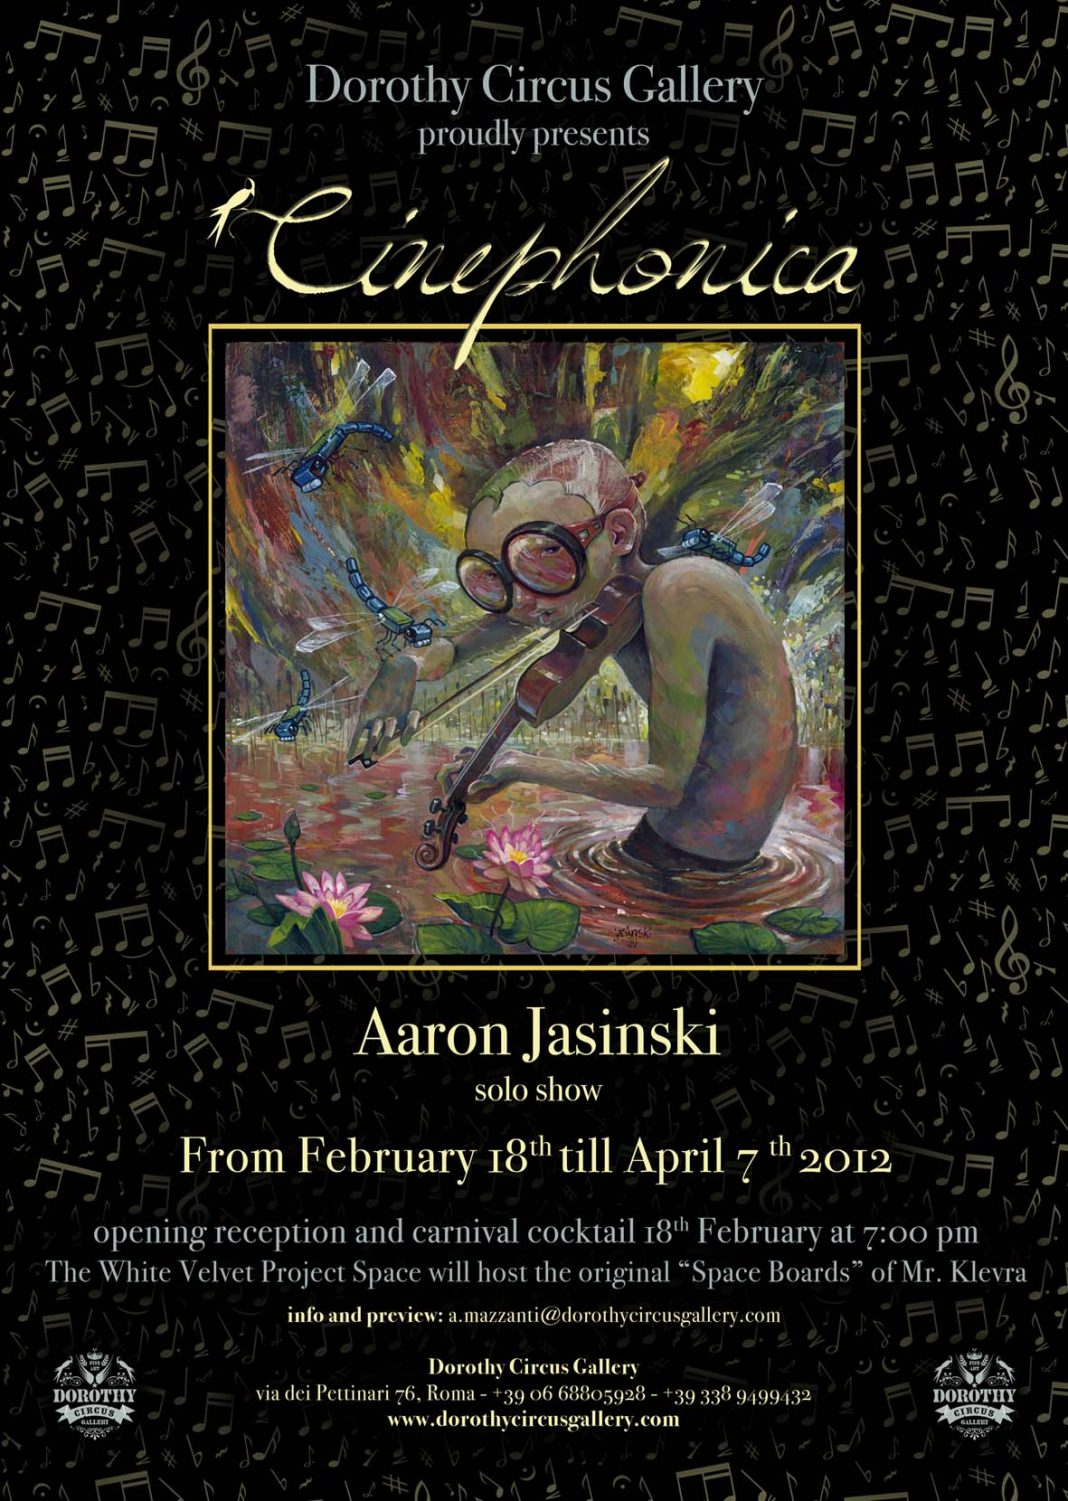 Aaron Jasinski – Cinephonicahttps://www.exibart.com/repository/media/eventi/2012/01/aaron-jasinski-8211-cinephonica-1068x1501.jpg